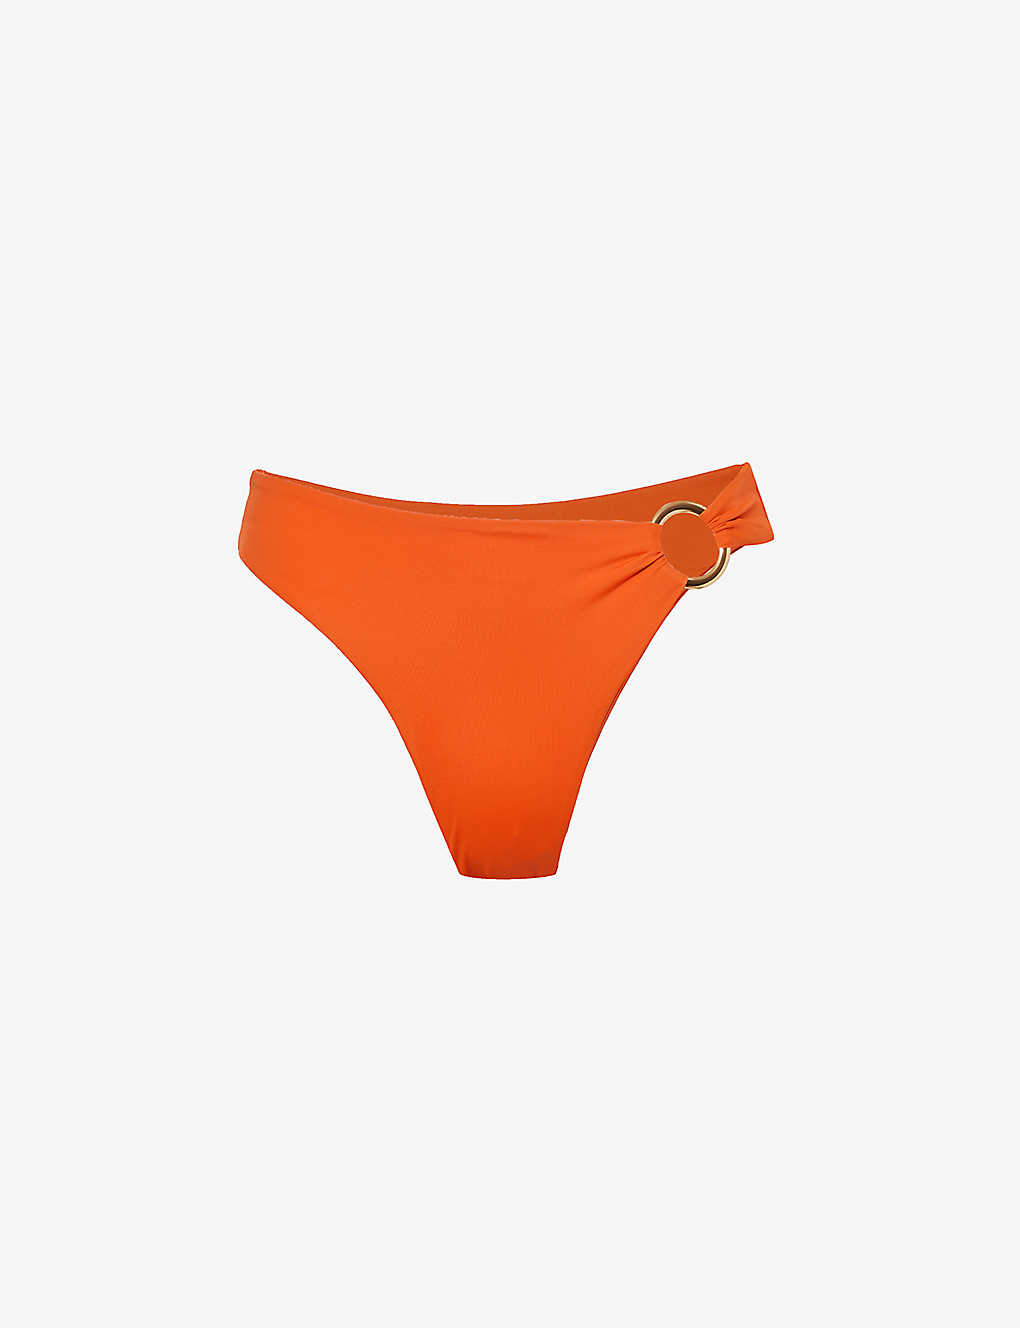 Away That Day Womens Burnt Orange Acapulco Recycled Polyamide-blend Bikini Bottoms